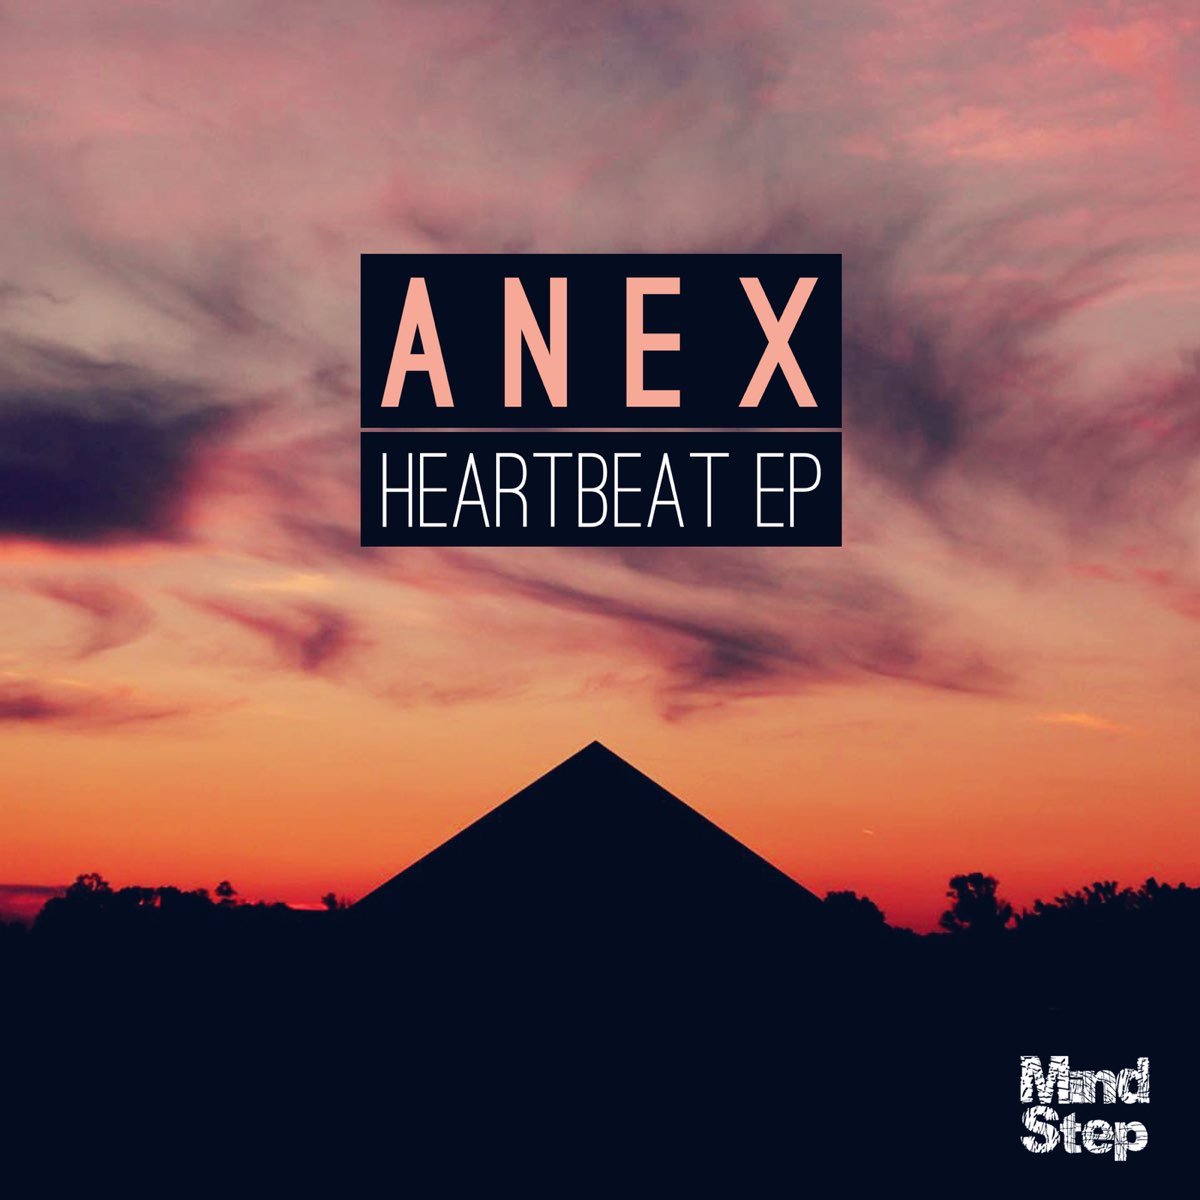 Heartbeat mp3. Heartbeat песня. 2016 - Vertex - Heartbeat [Ep].